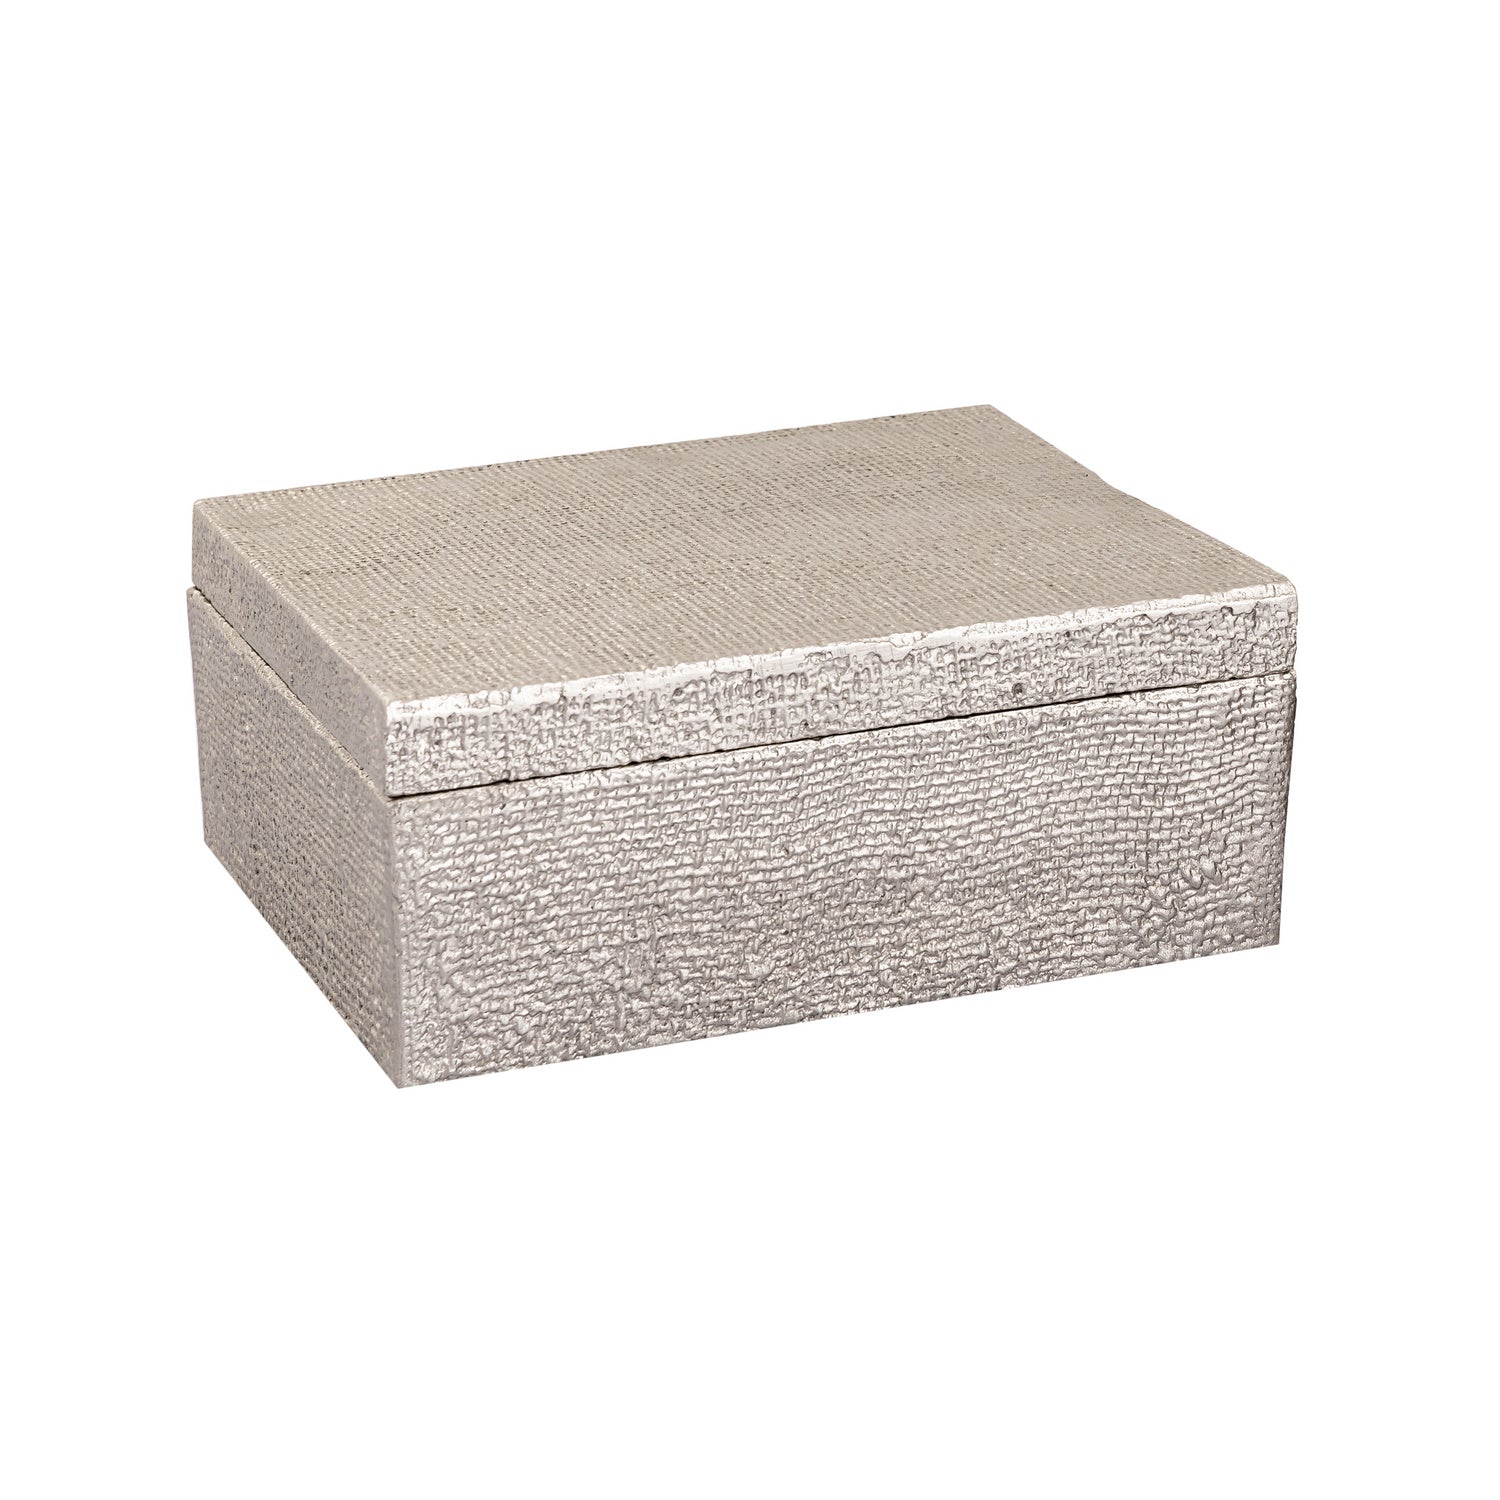 ELK Home - H0807-10666 - Box - Square Linen - Antique Nickel